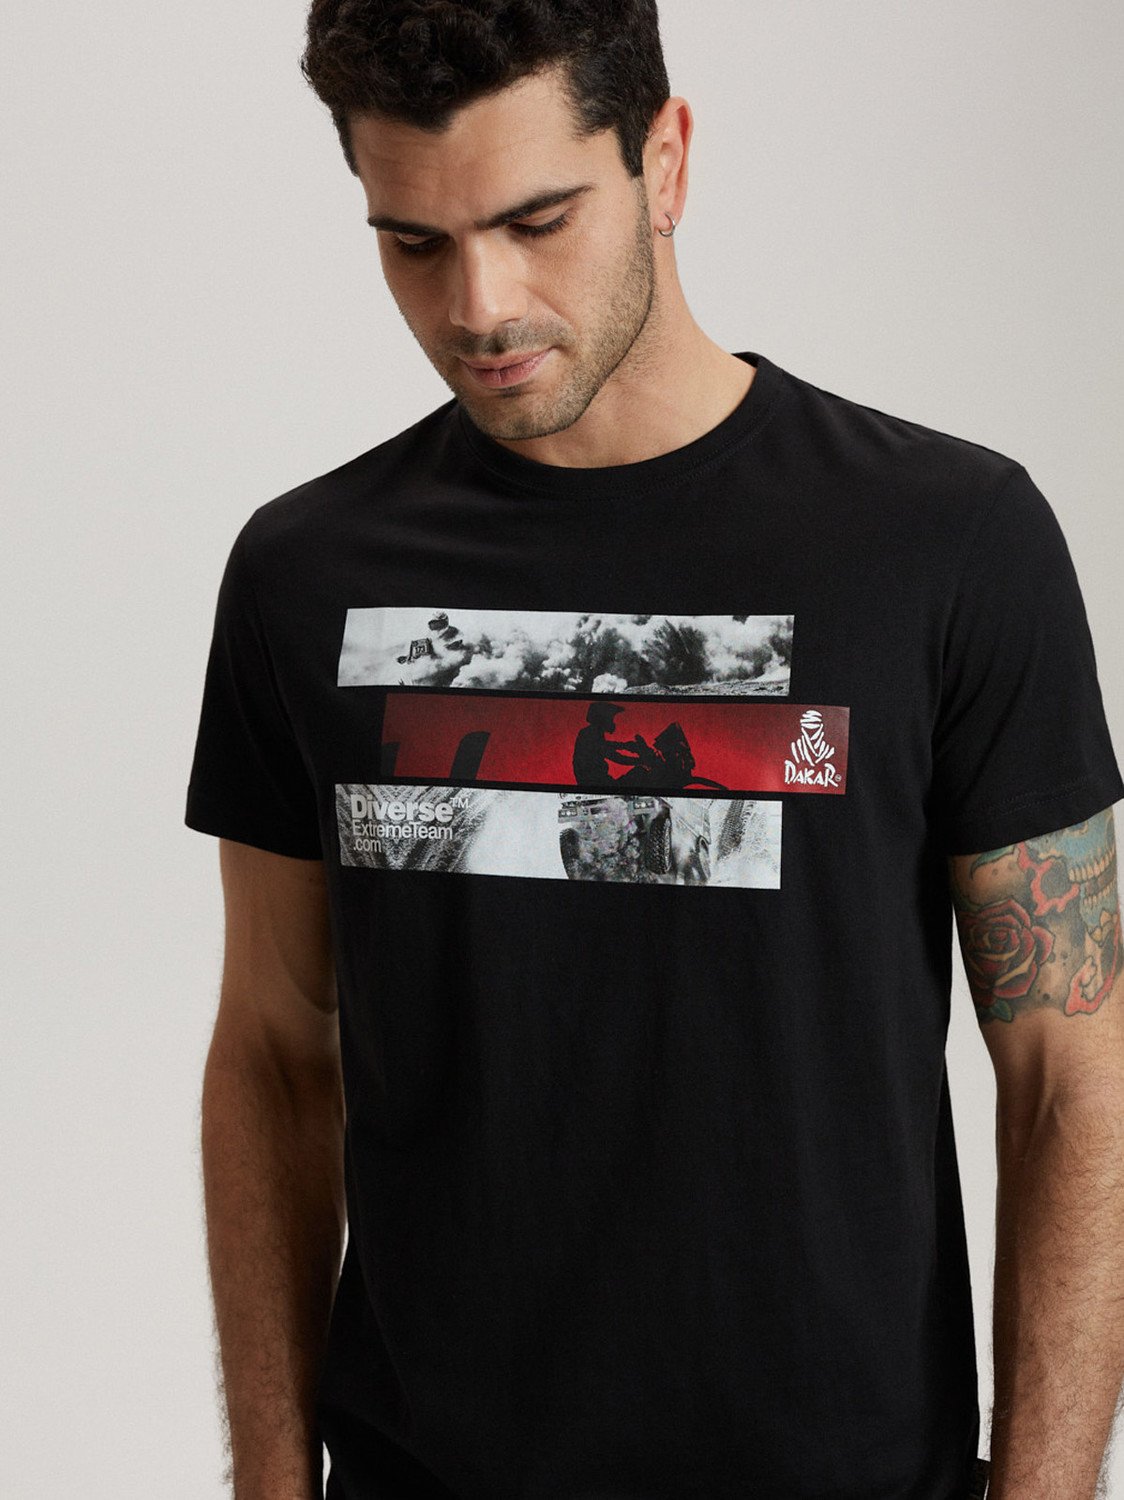 Diverse Men's printed T-shirt DKR S 0223